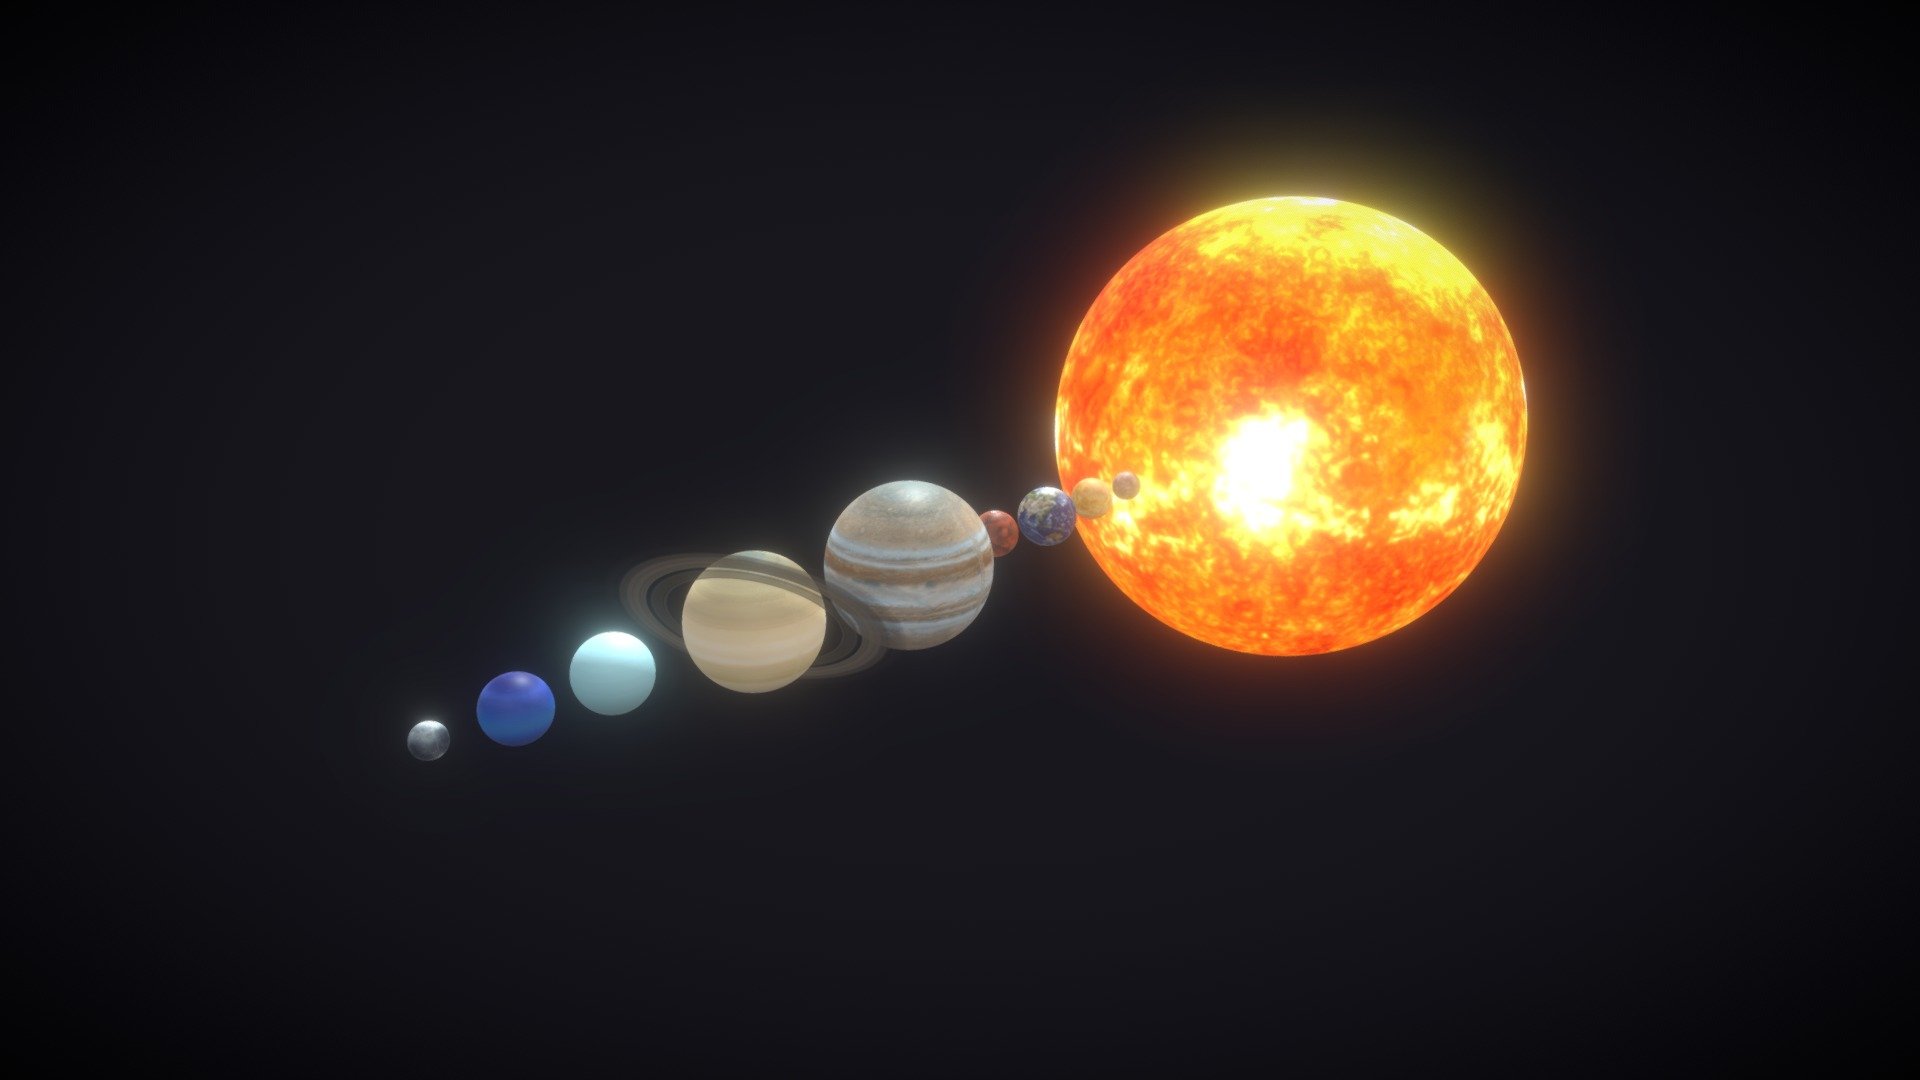 Photorealistic Solar System + Pluto 8k Textures - Buy Royalty Free 3D